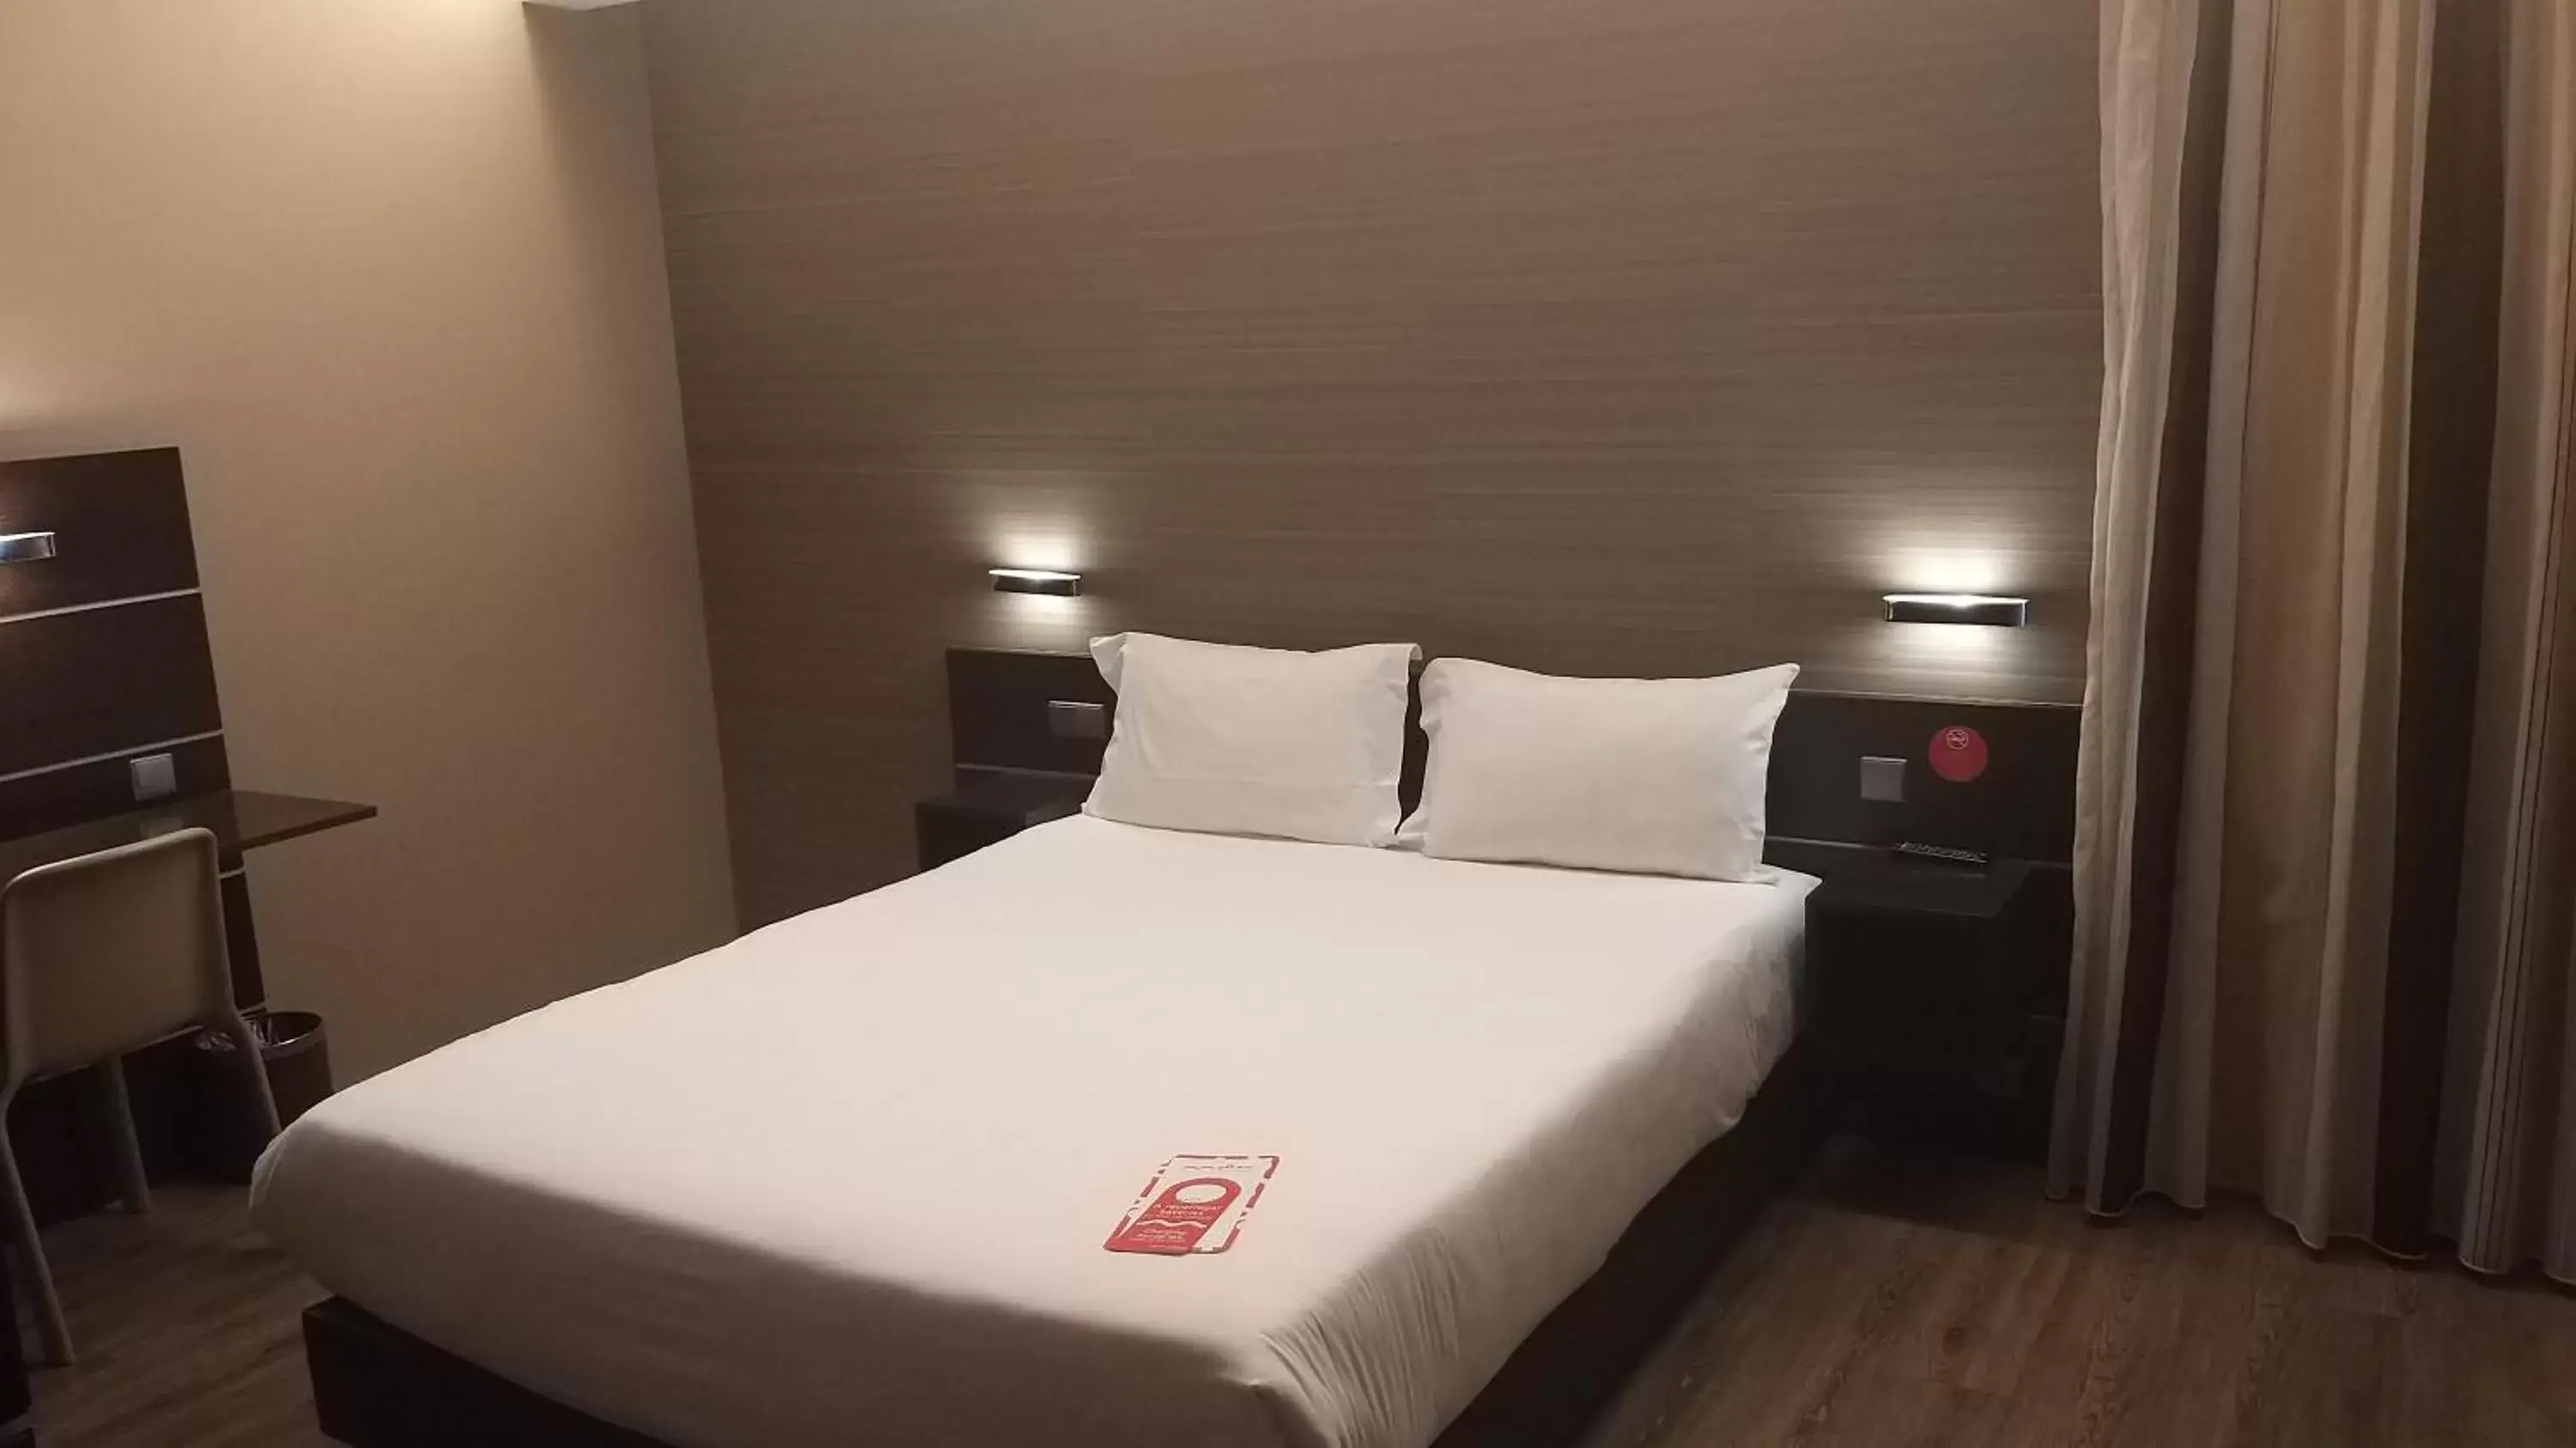 Bedroom, Bed in Moov Hotel Évora